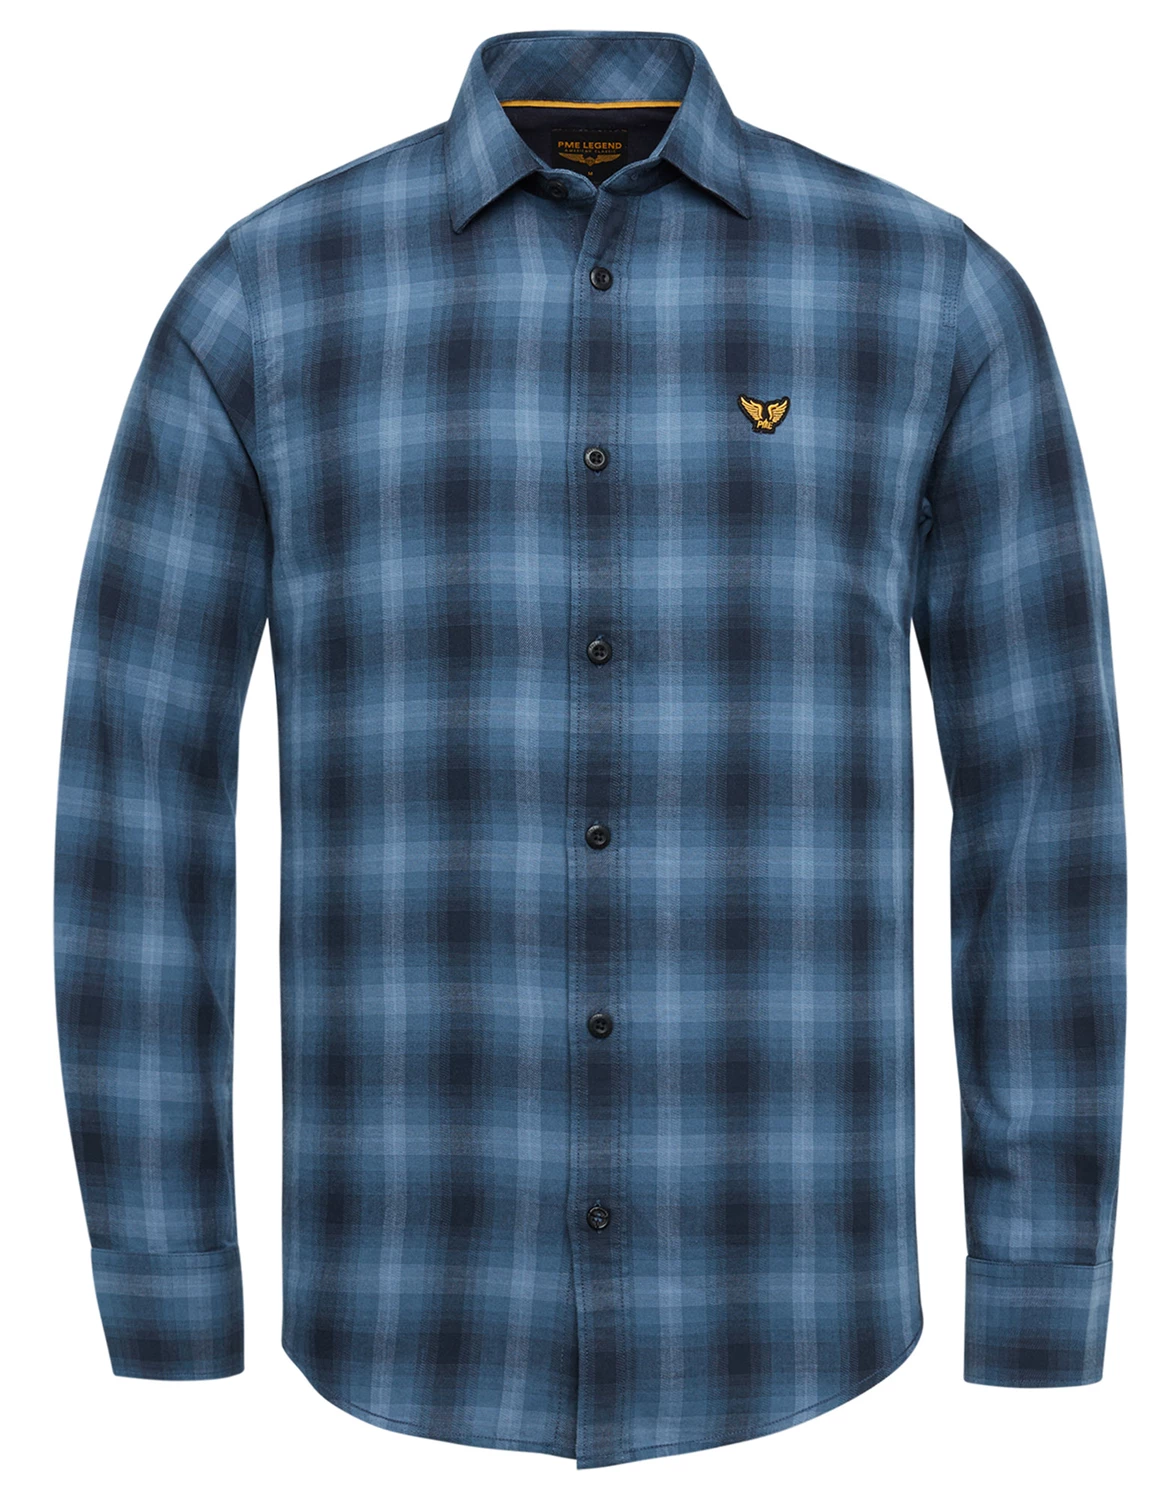 Plantage adviseren Sportman PME Legend Long Sleeve Shirt Ctn Yarn Dyed Tw PSI2210203 blauw kopen bij  The Stone